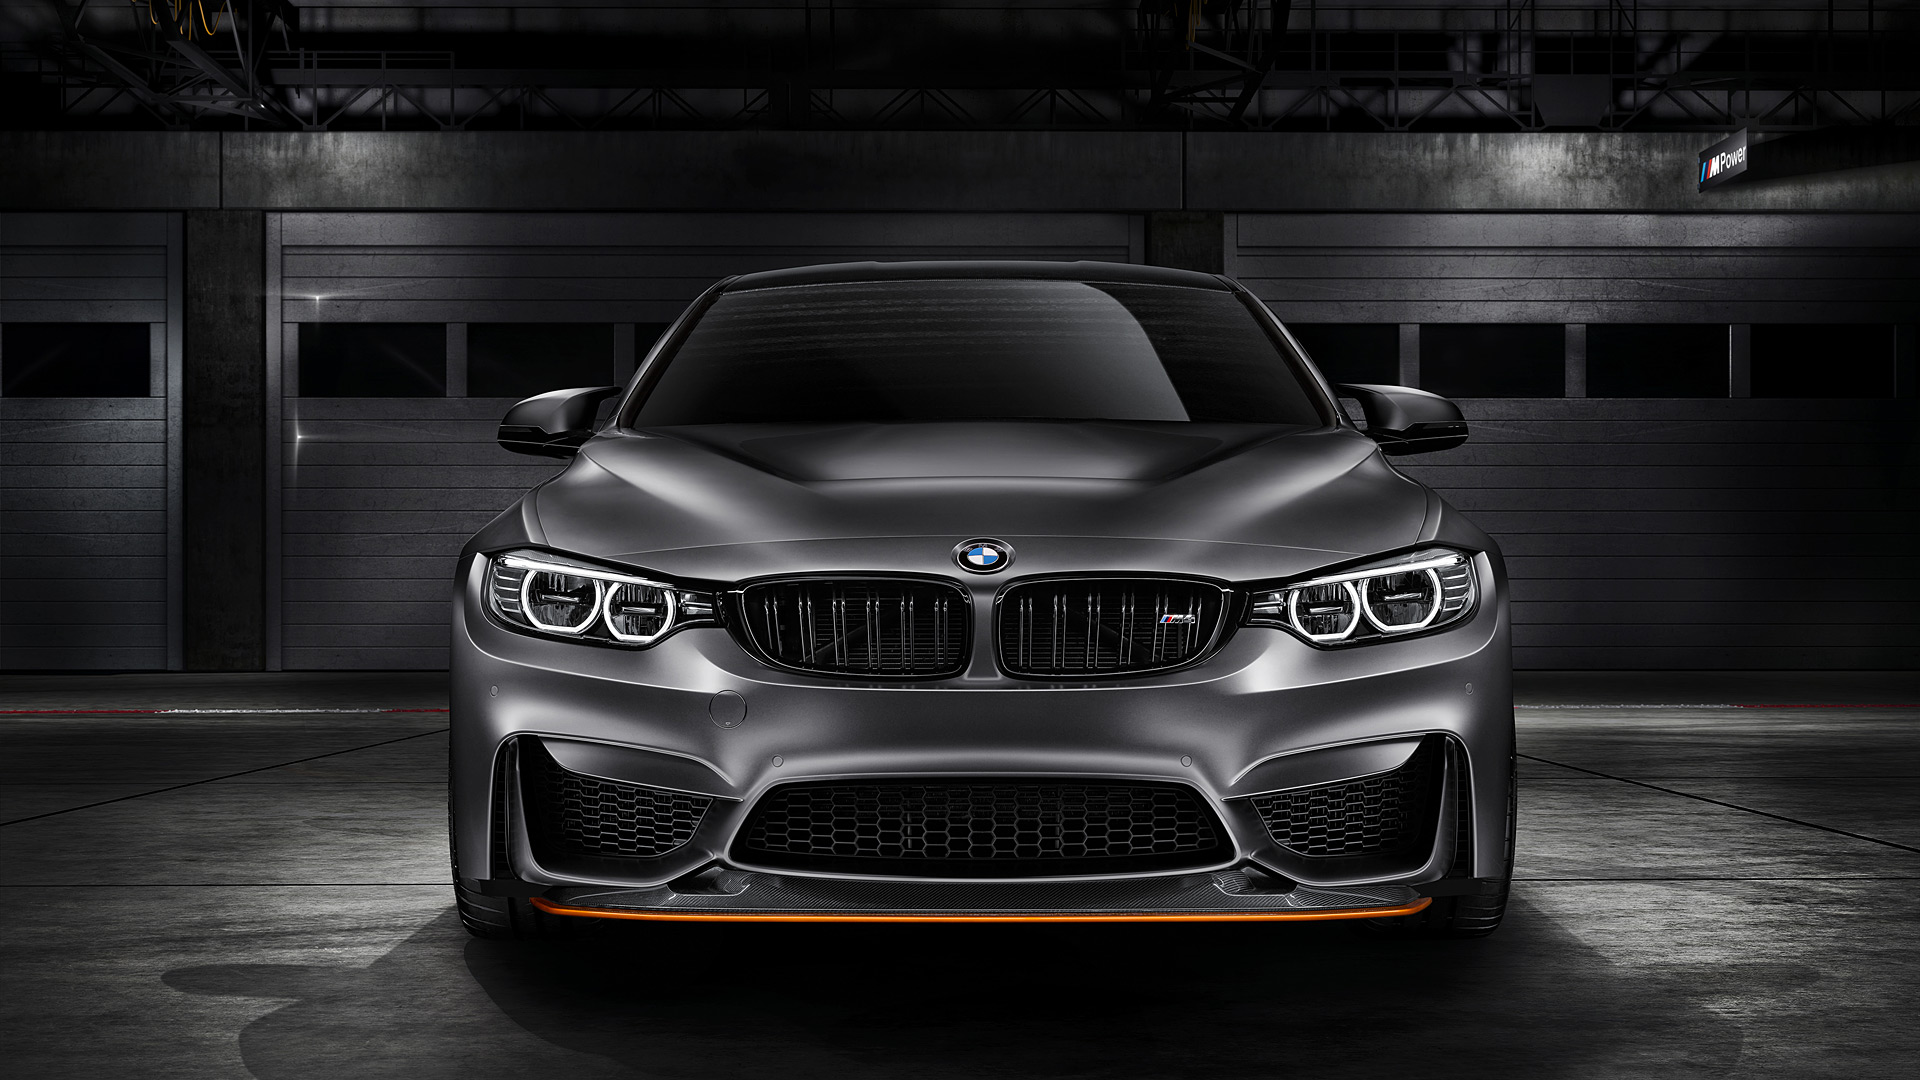  2015 BMW M4 GTS Concept Wallpaper.